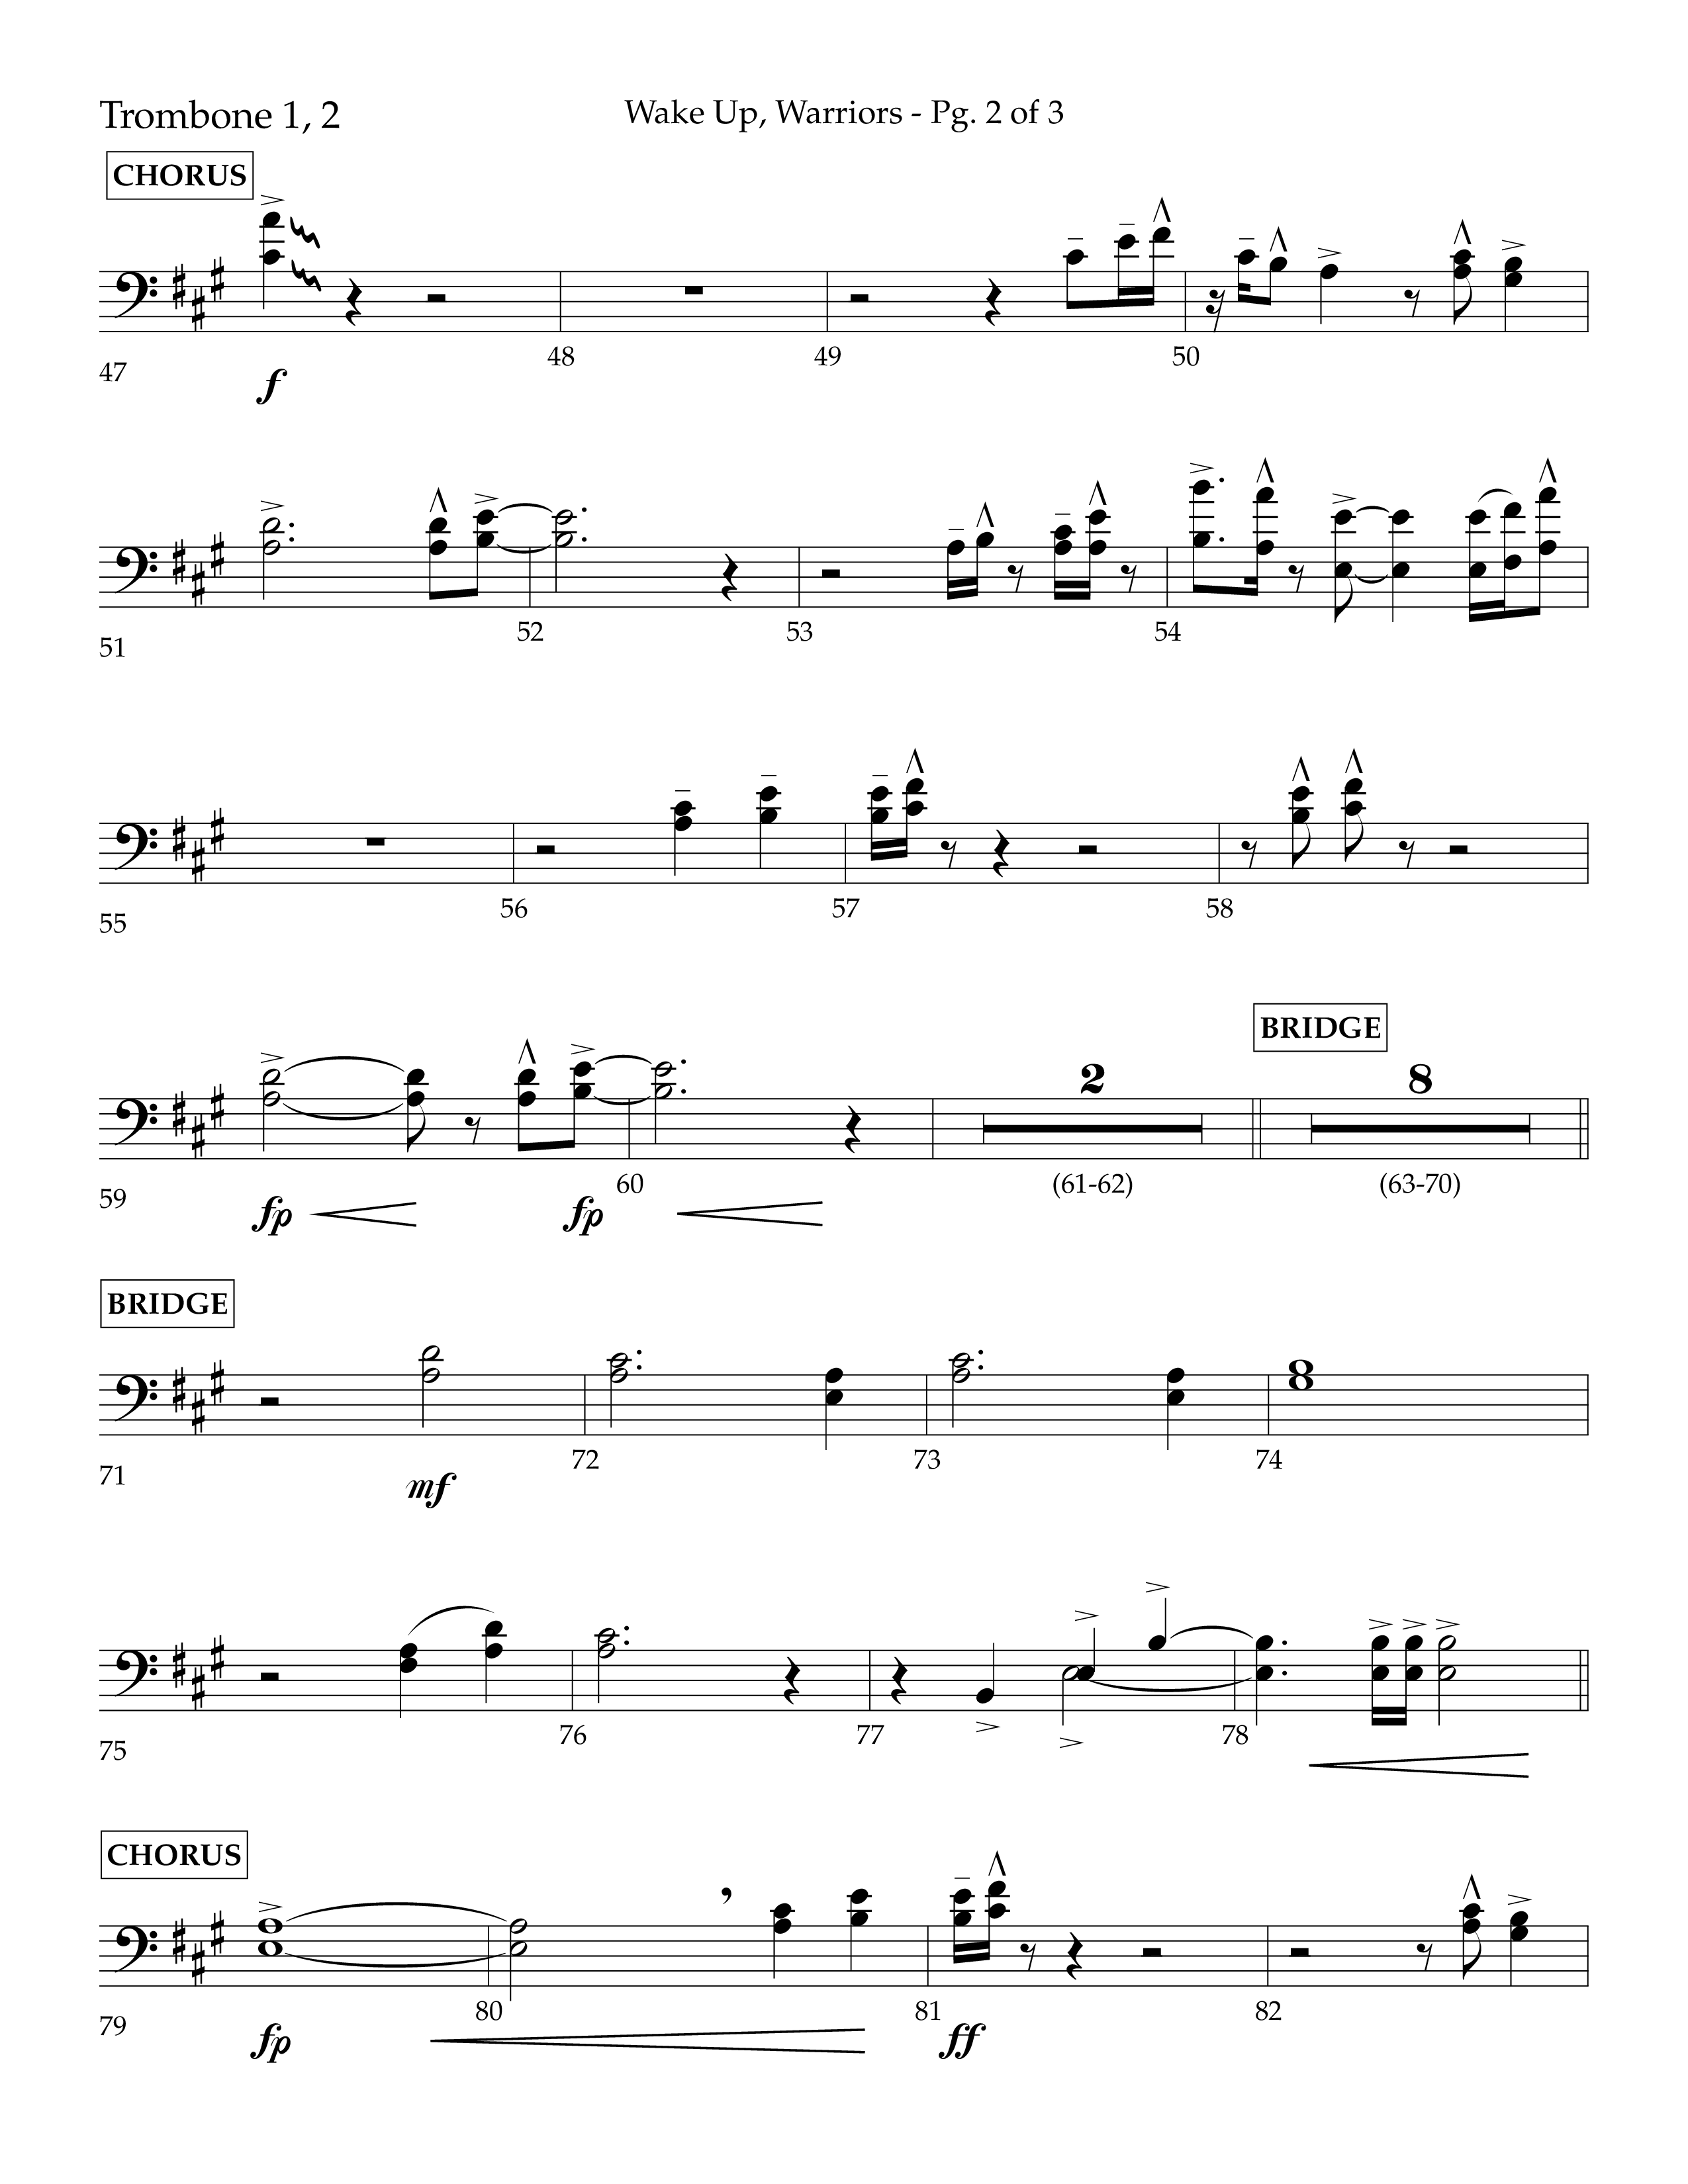 Wake Up Warriors (Choral Anthem SATB) Trombone 1/2 (Lifeway Choral / Arr. John Bolin / Orch. Tim Cates)